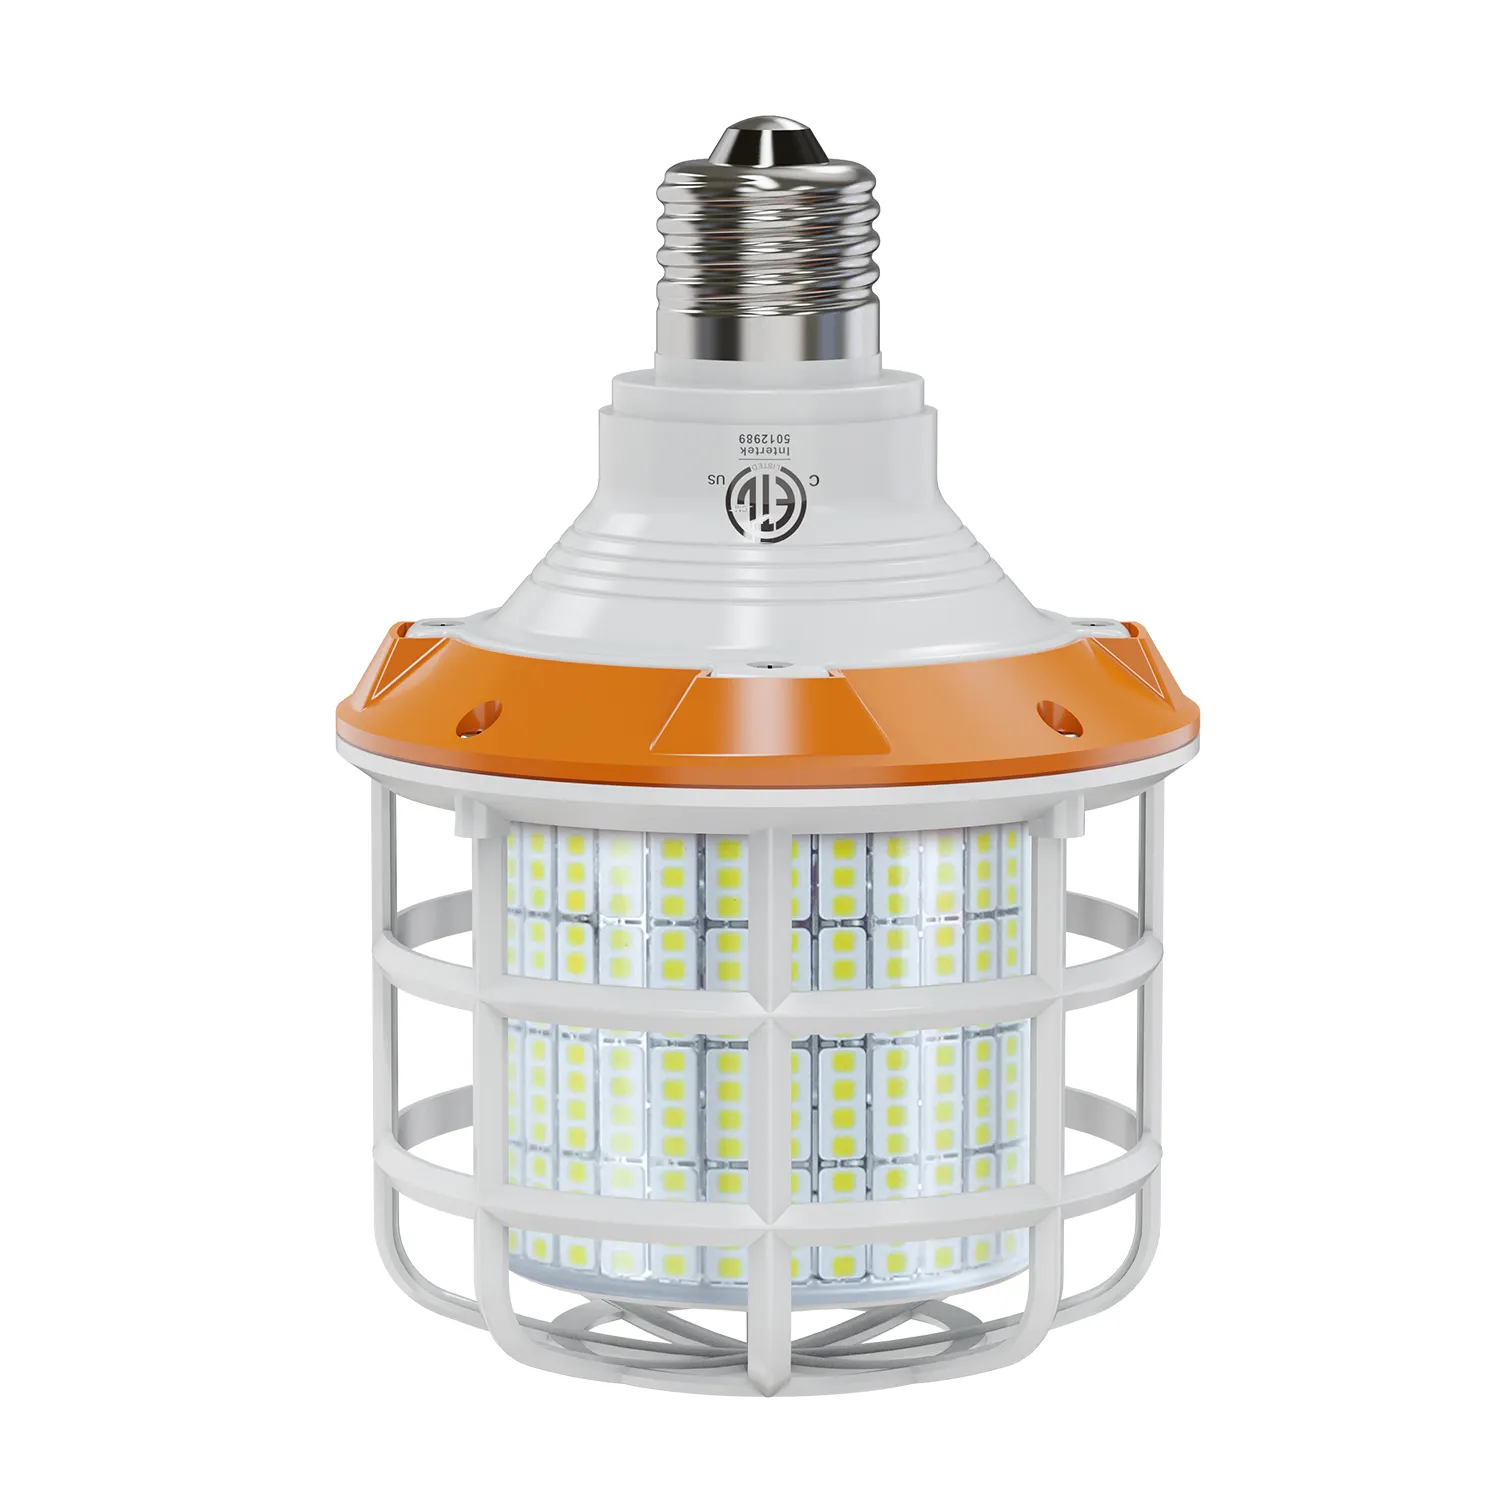 New 360 Degree Luminous 40w IP65 Waterproof LED Explosion-proof Lamp Corn Light Bulb